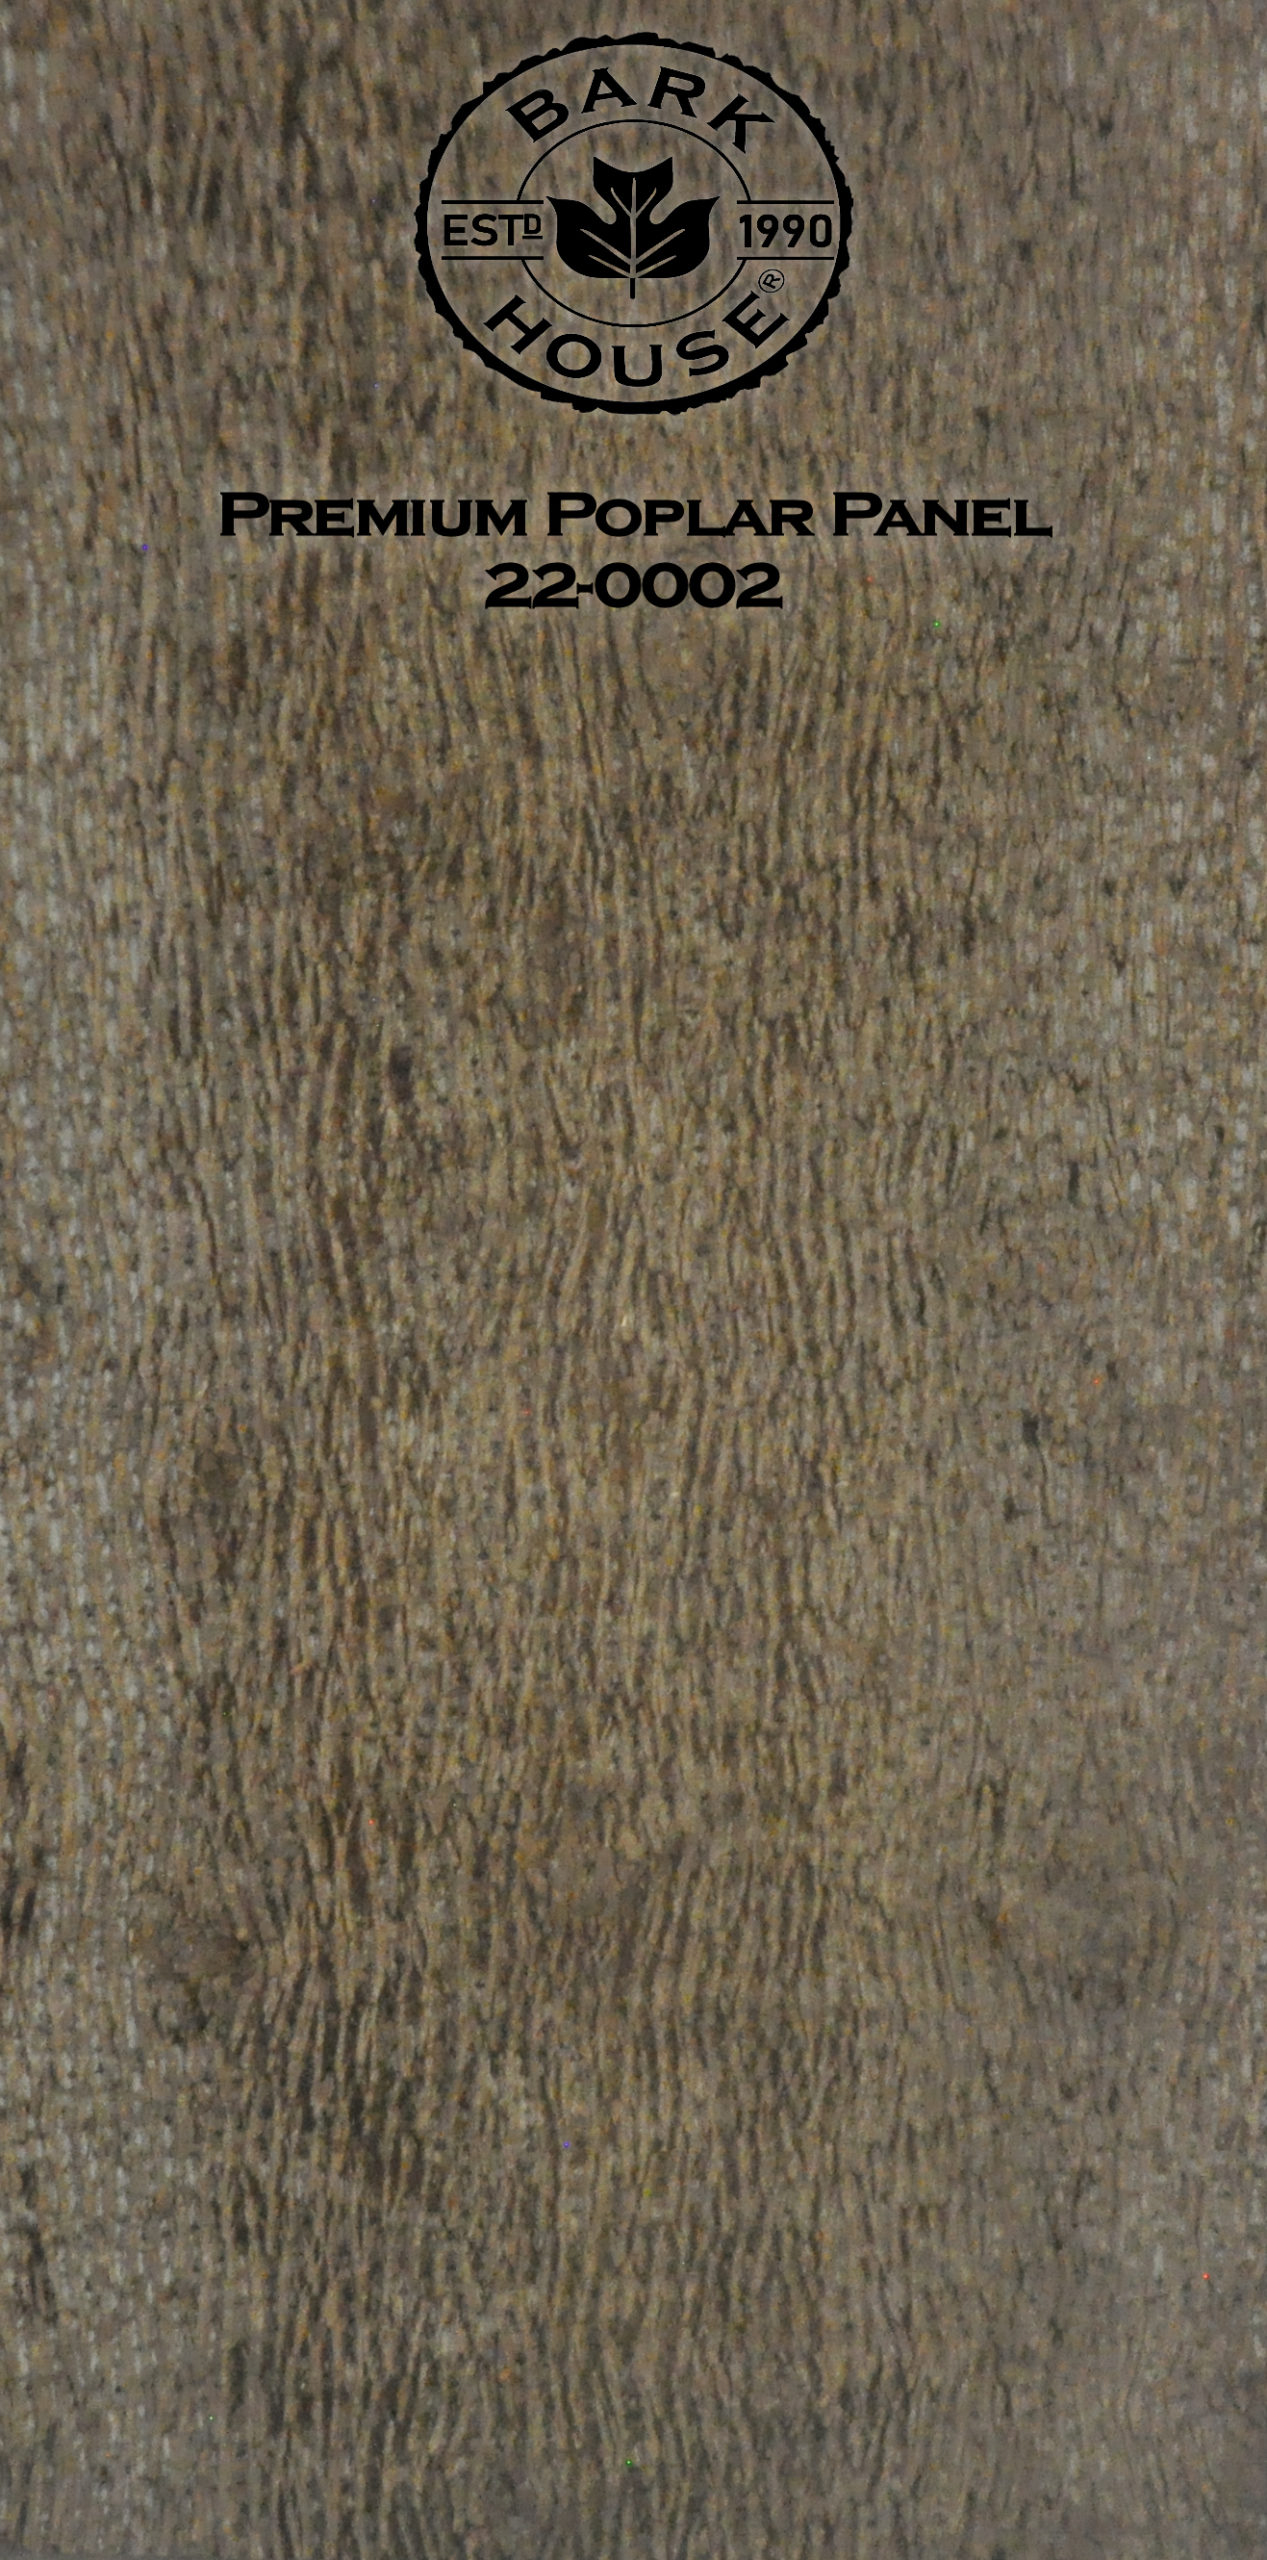 Bark House poplar bark panel SKU POPP-PRE-22-0002